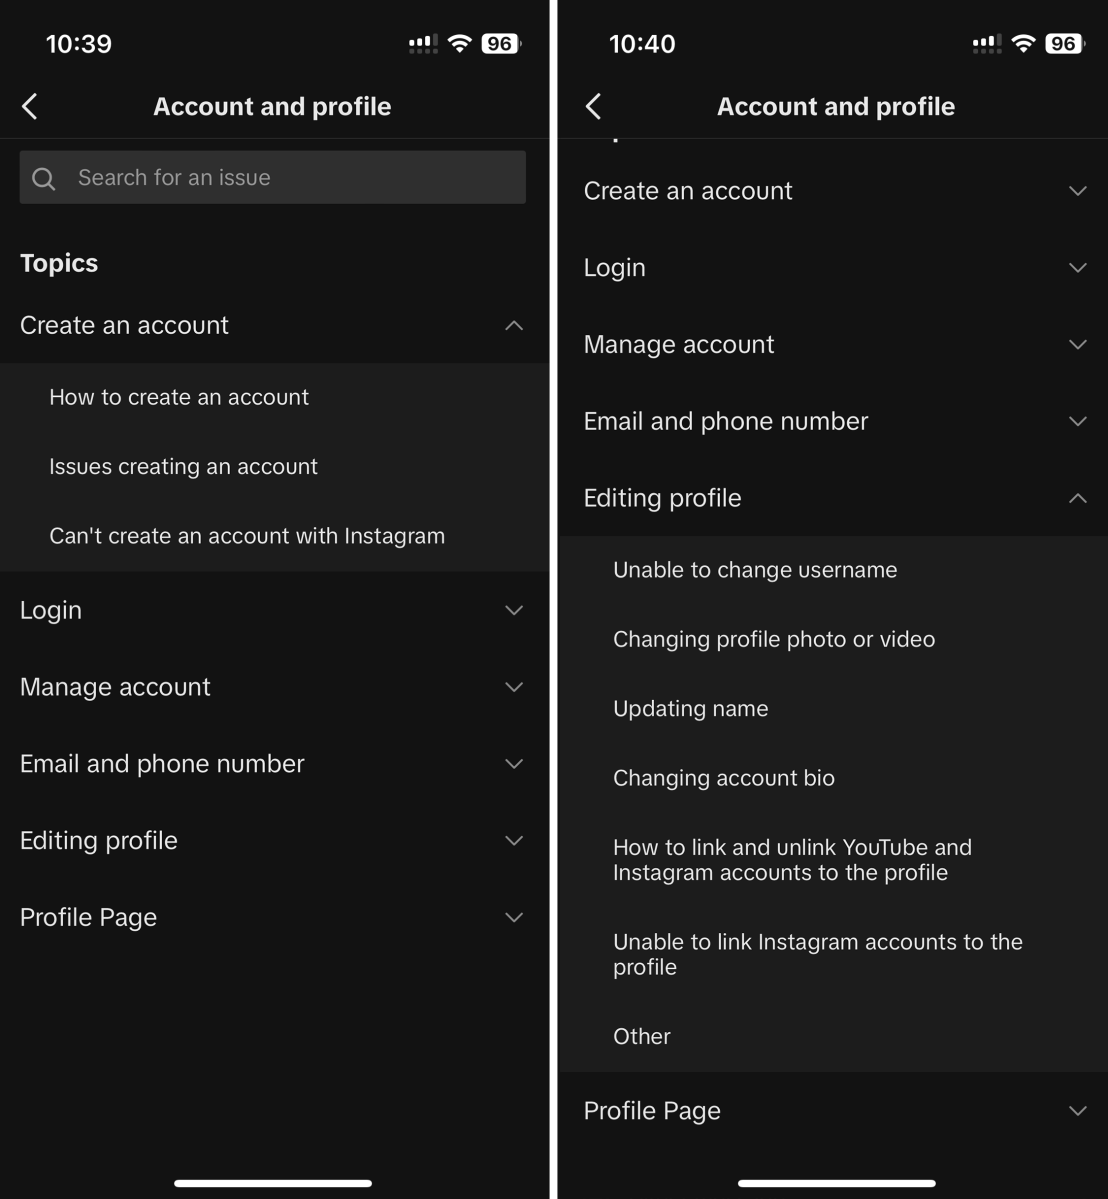 Screenshots if TikTok's Settings and Privacy options